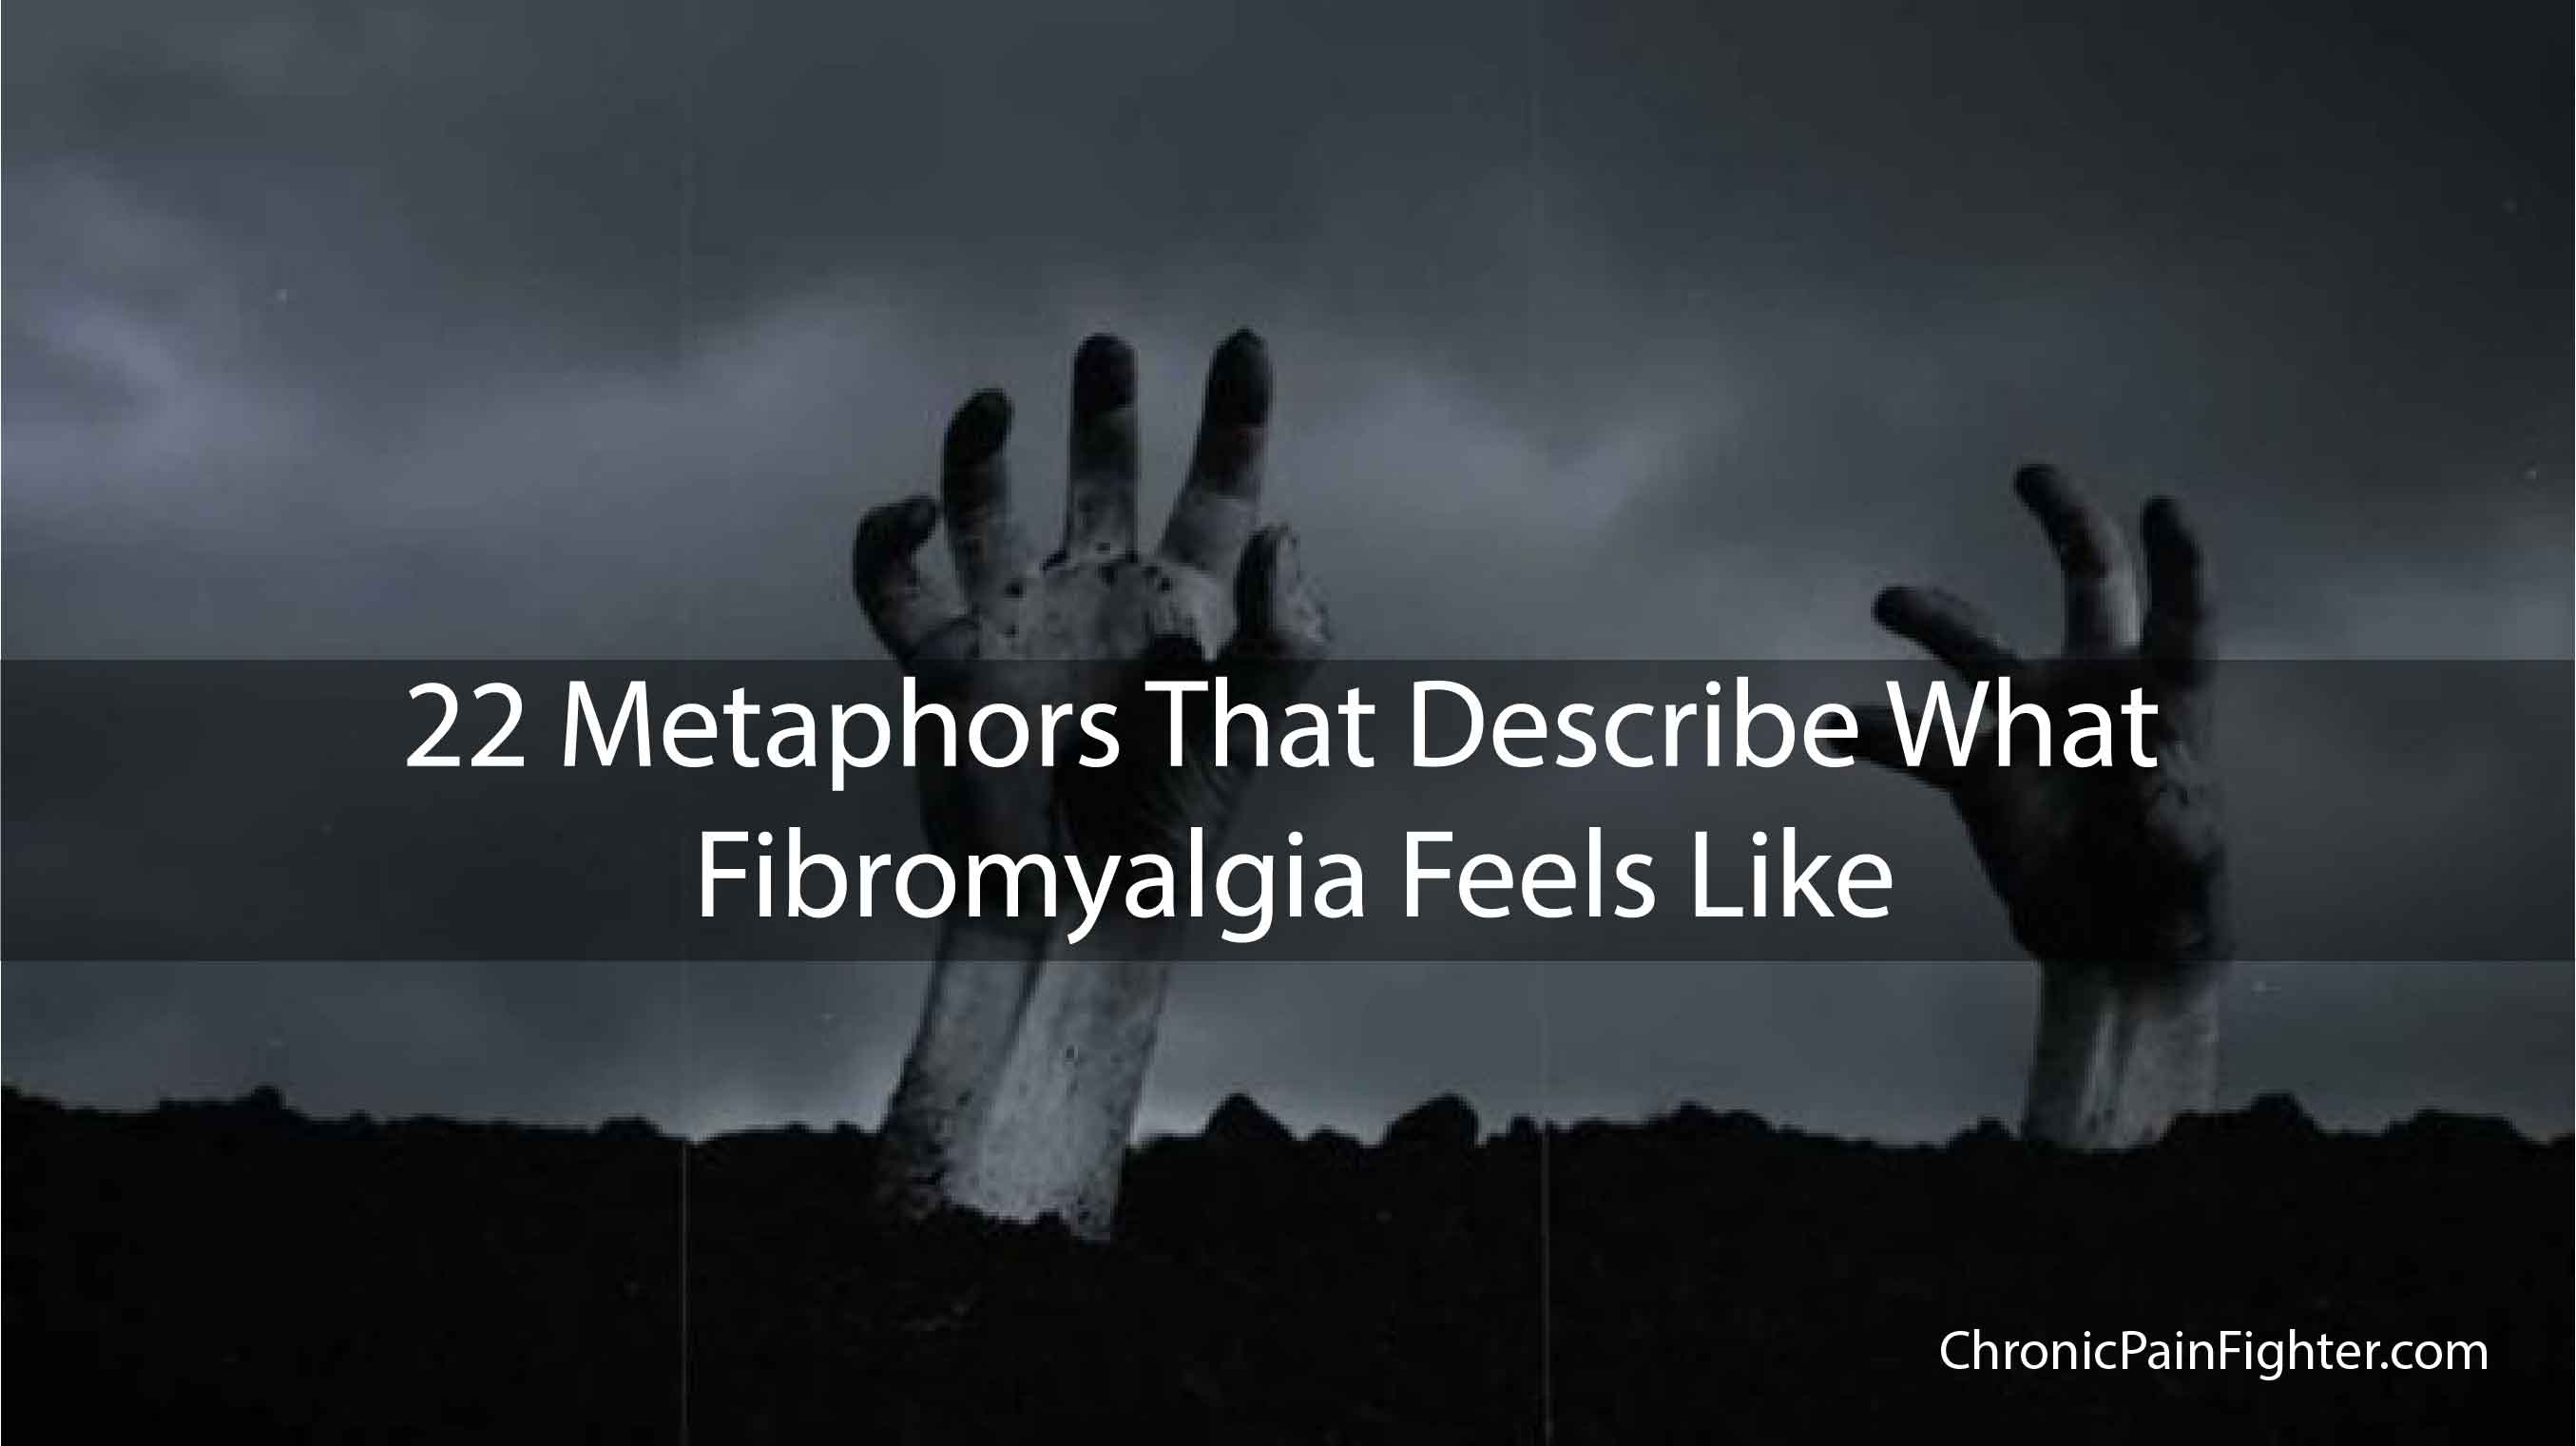 22 Metaphors That Describe What Fibromyalgia Feels Like